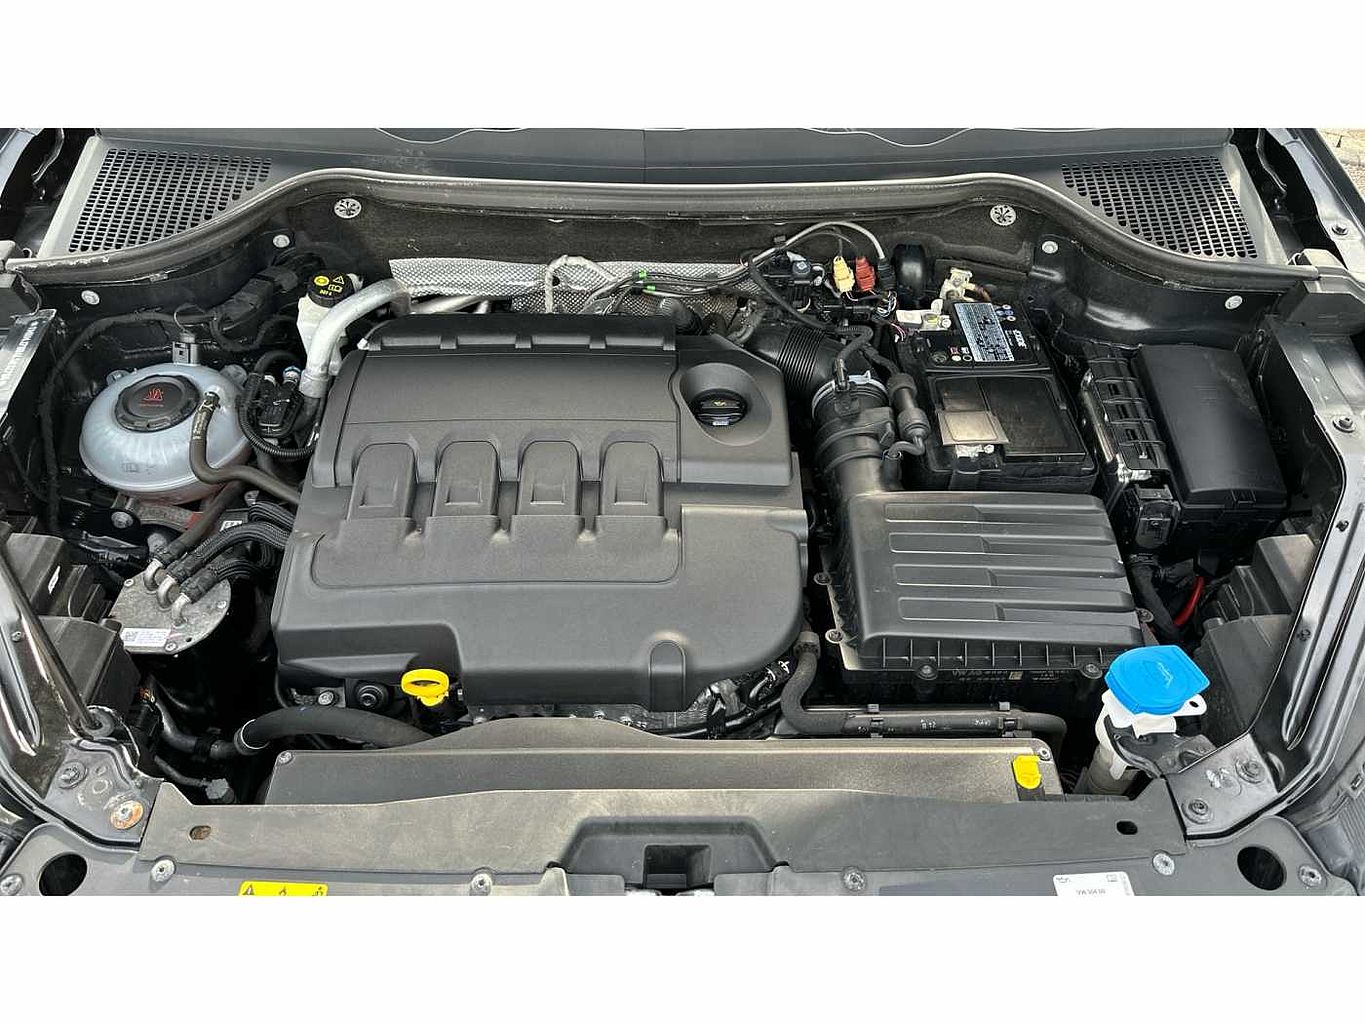 SKODA Karoq SUV 2.0TDI (150ps) SCR 4X4 SE L DSG